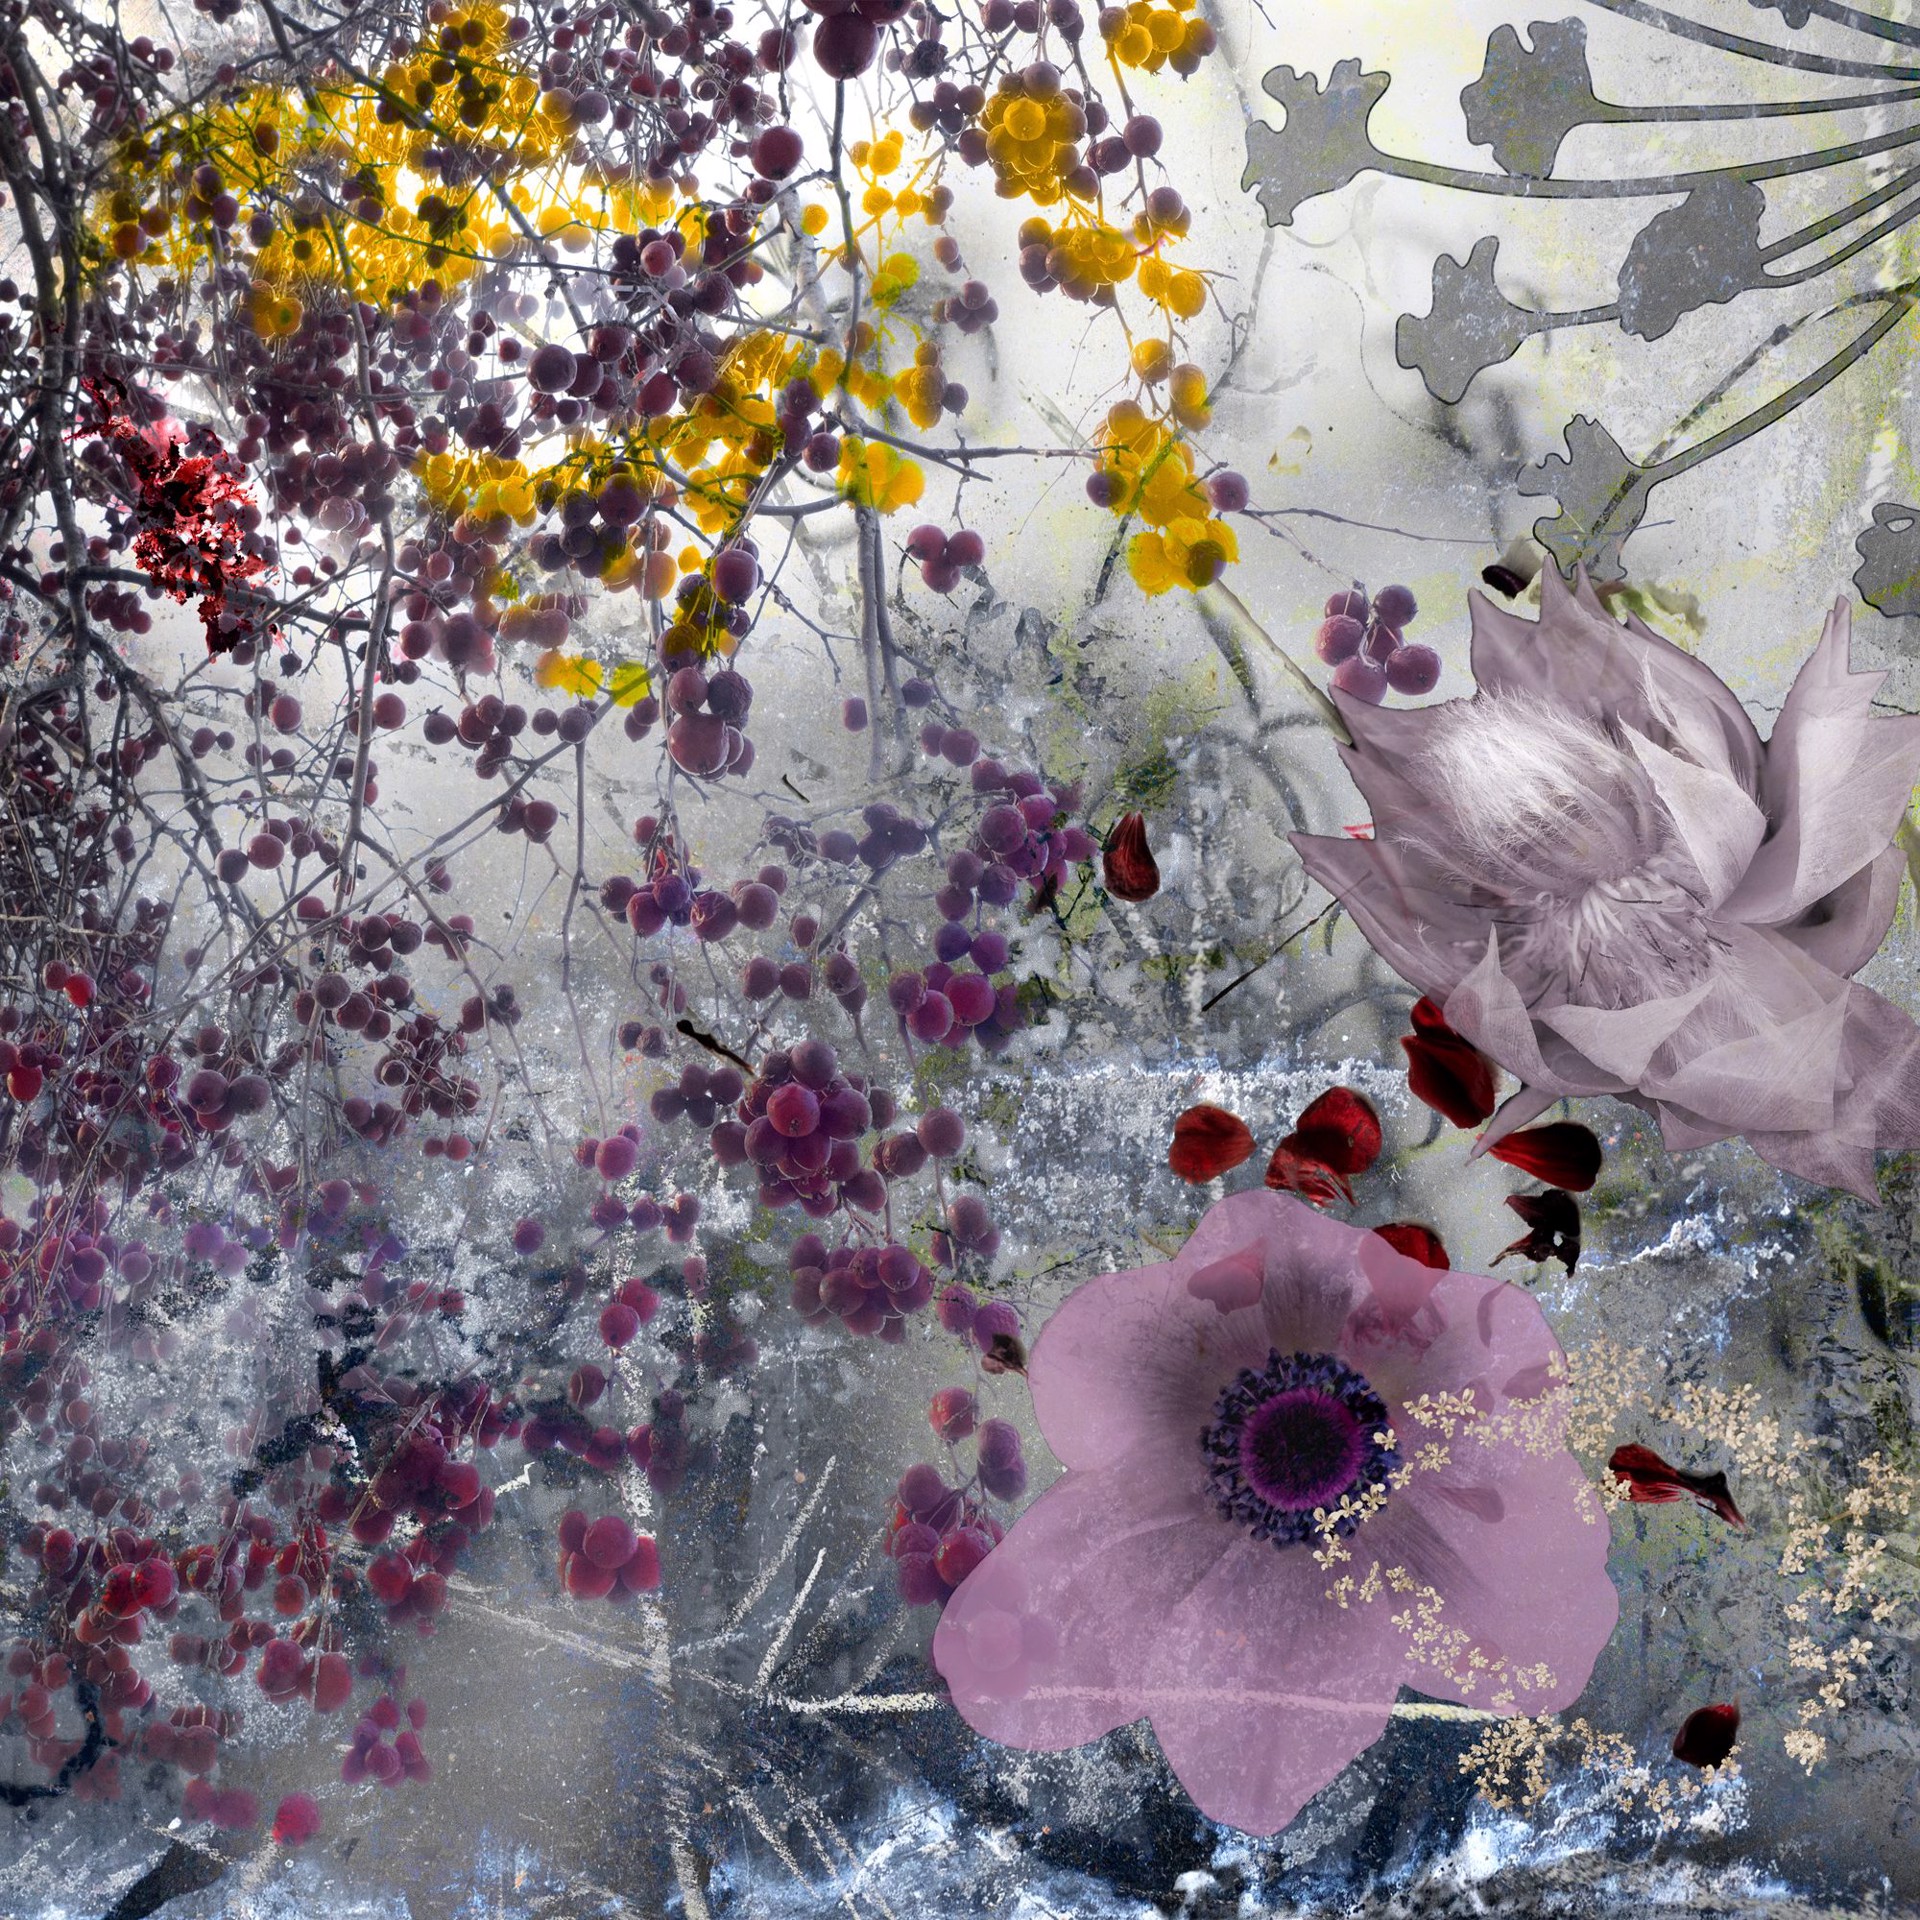 FLOWERS SERIES I NO. 2 by CAROL EISENBERG